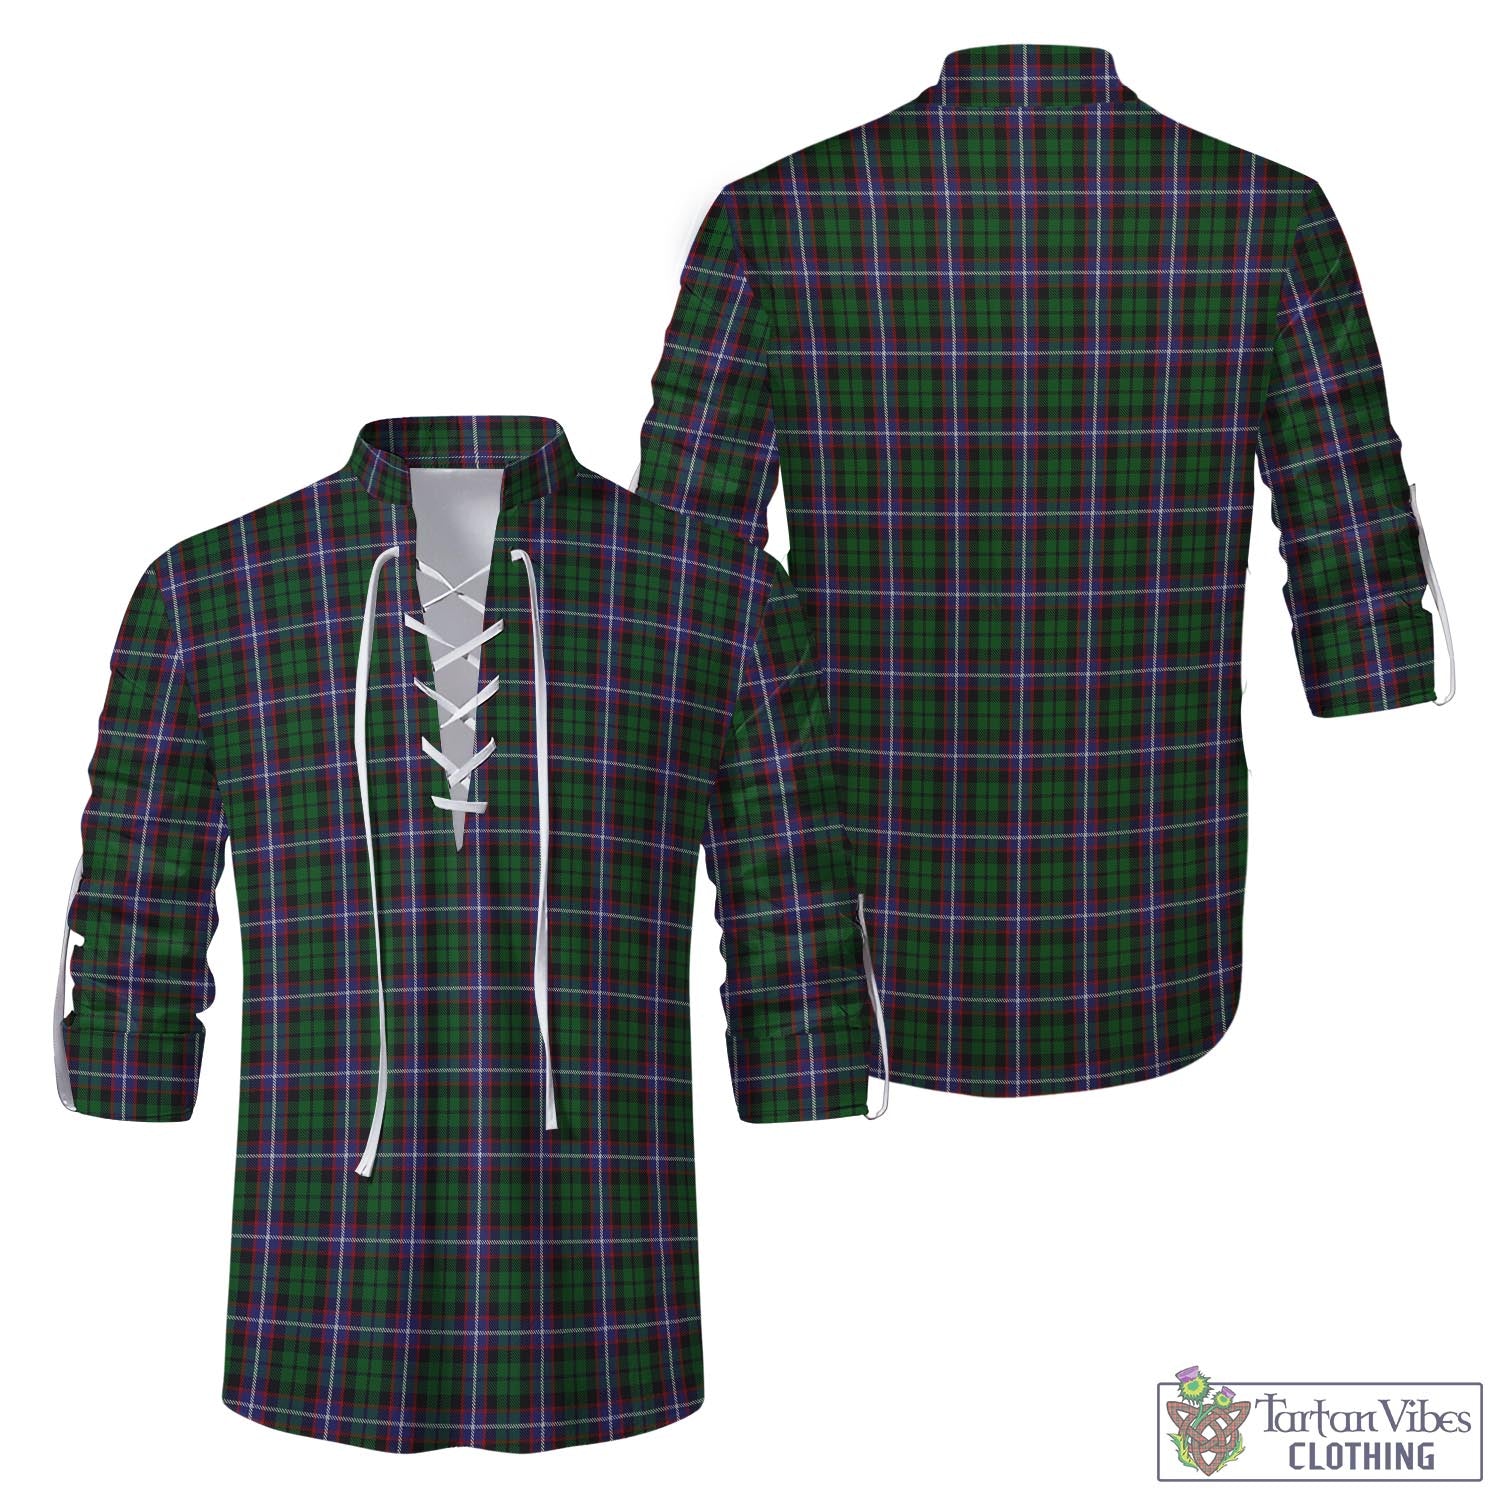 Tartan Vibes Clothing Russell Tartan Men's Scottish Traditional Jacobite Ghillie Kilt Shirt